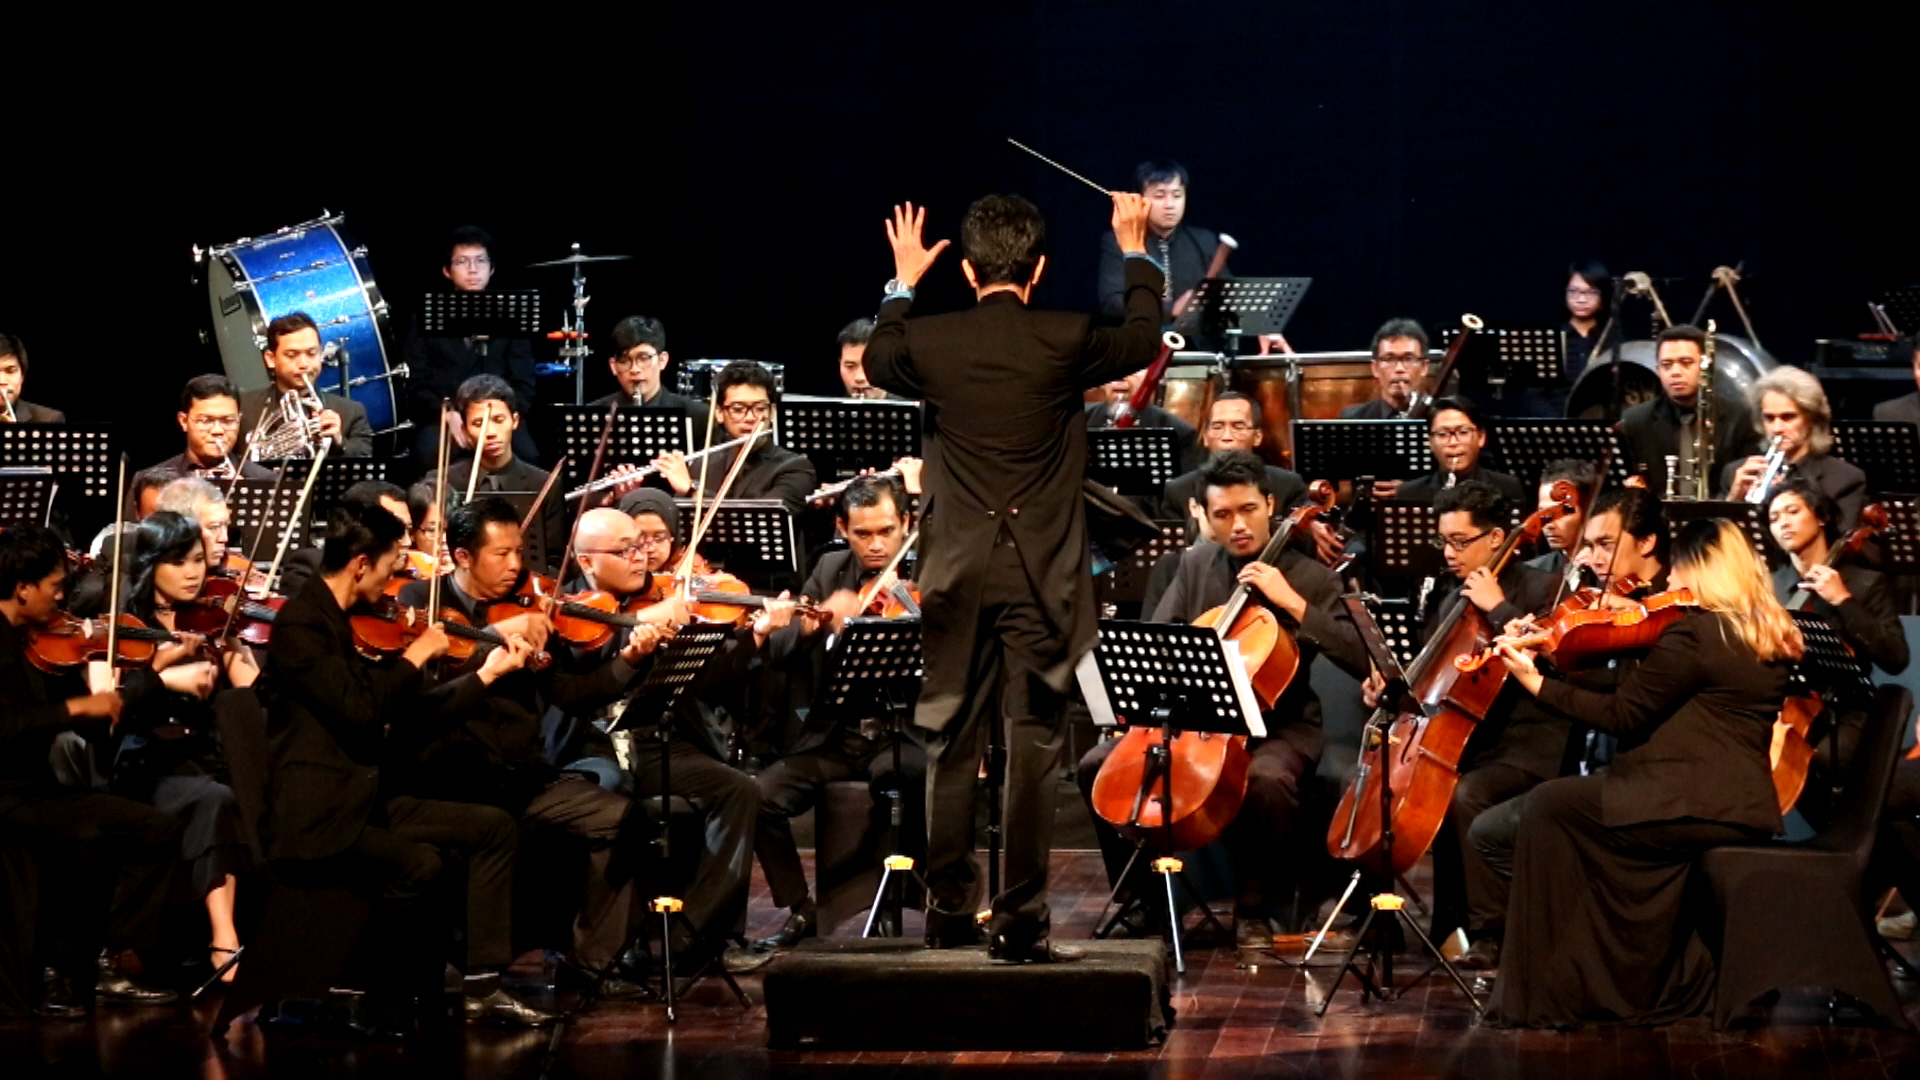 Orkes itu dimainkan oleh 56 pemusik terpilih yang sudah menjalankan audisi di Jakarta dan Yogyakarta. Mereka rata-rata masih berusia 20-an dan tampil dalam dua babak yang masing-masing berdurasi 40 menit.